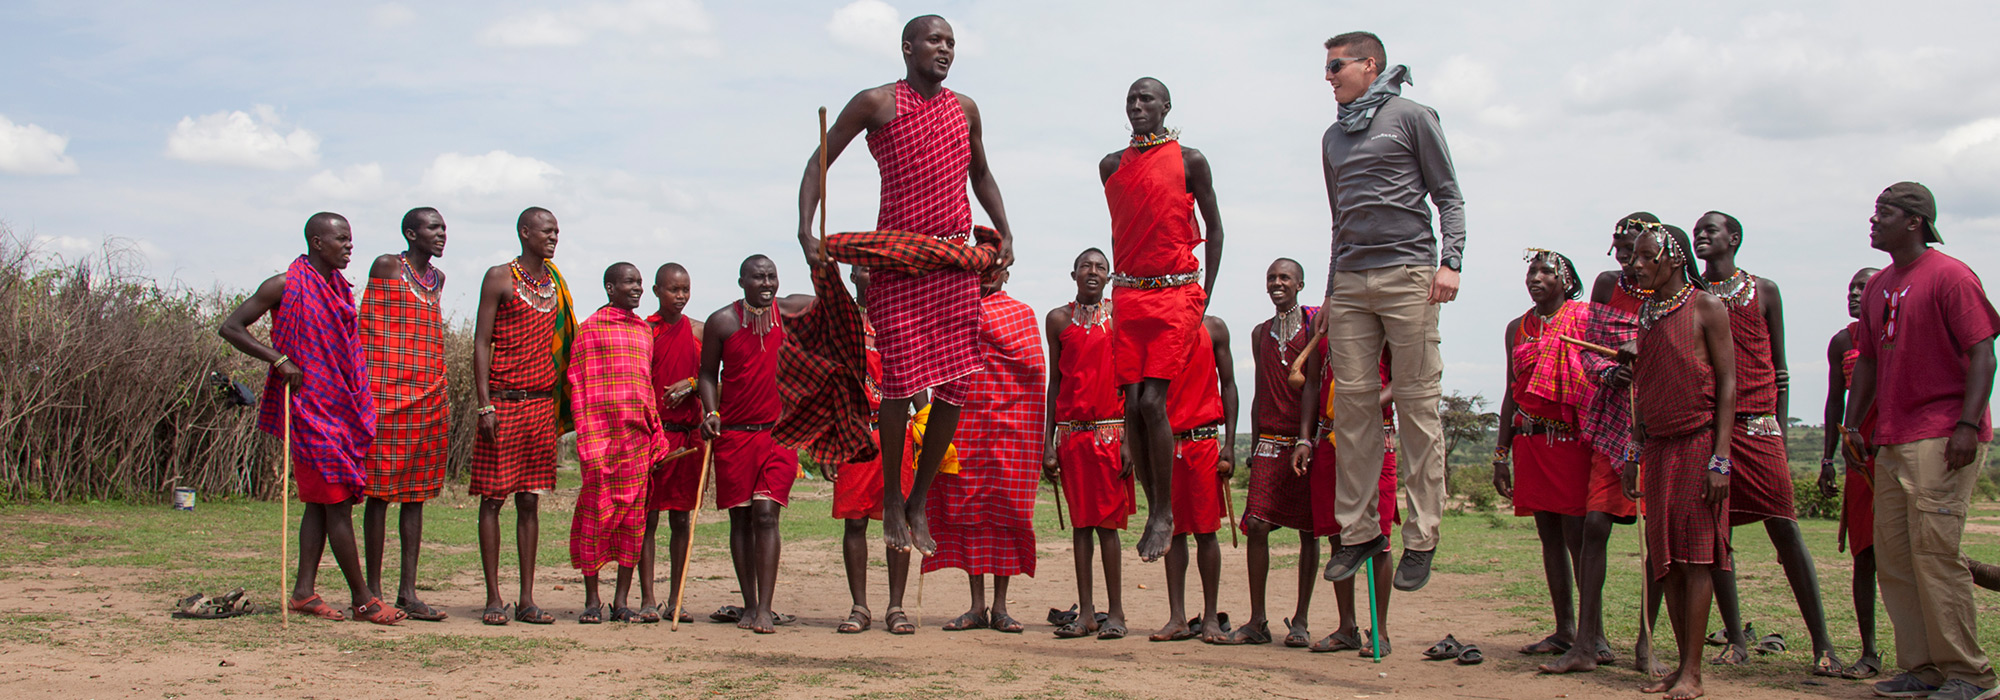 UC business student John Pancioli jumps with the Maasai people in a Maasai village in Kenya